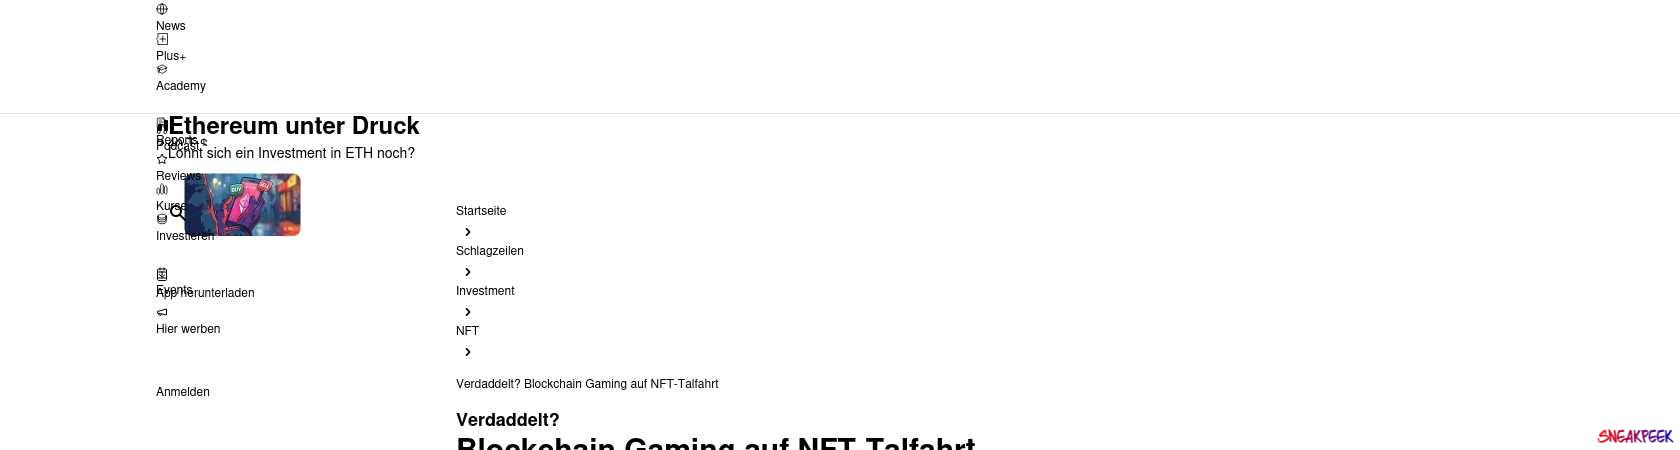 Read the full Article:  ⭲ Verdaddelt? Blockchain Gaming auf NFT-Talfahrt